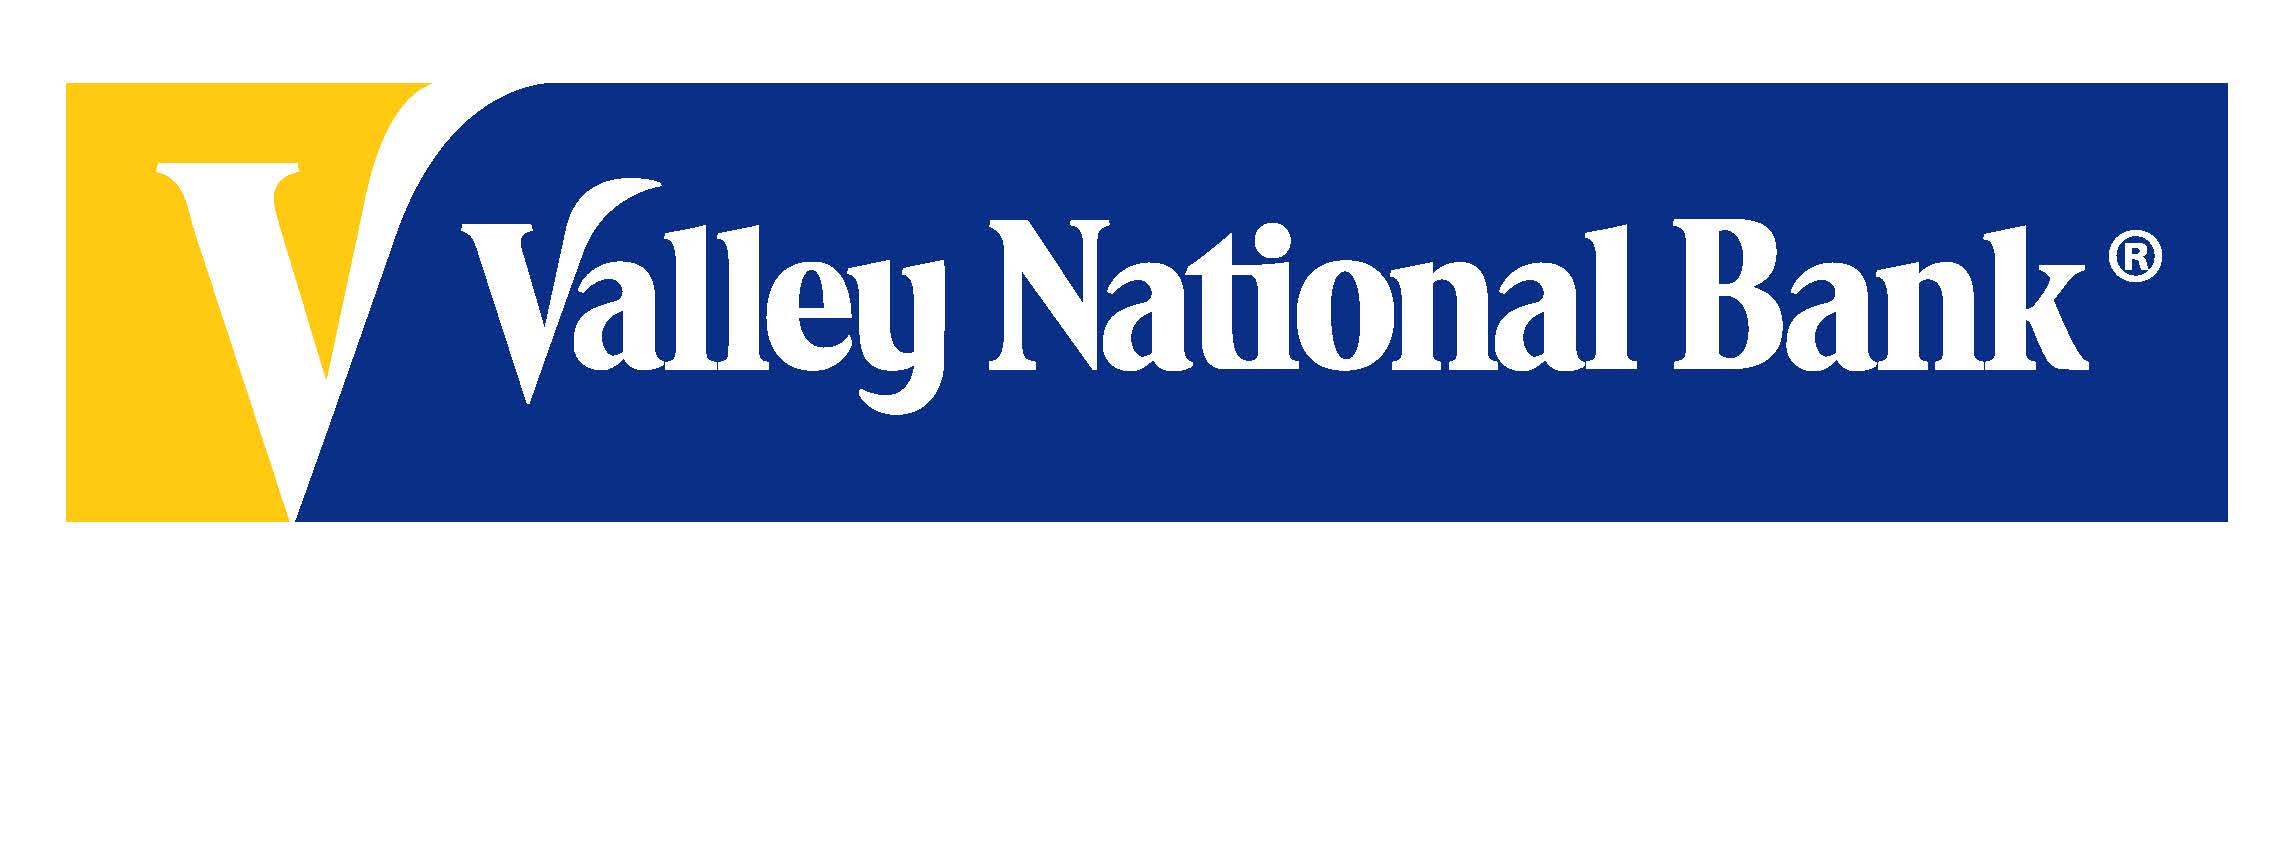 Valley National Bancorp Brand Logo